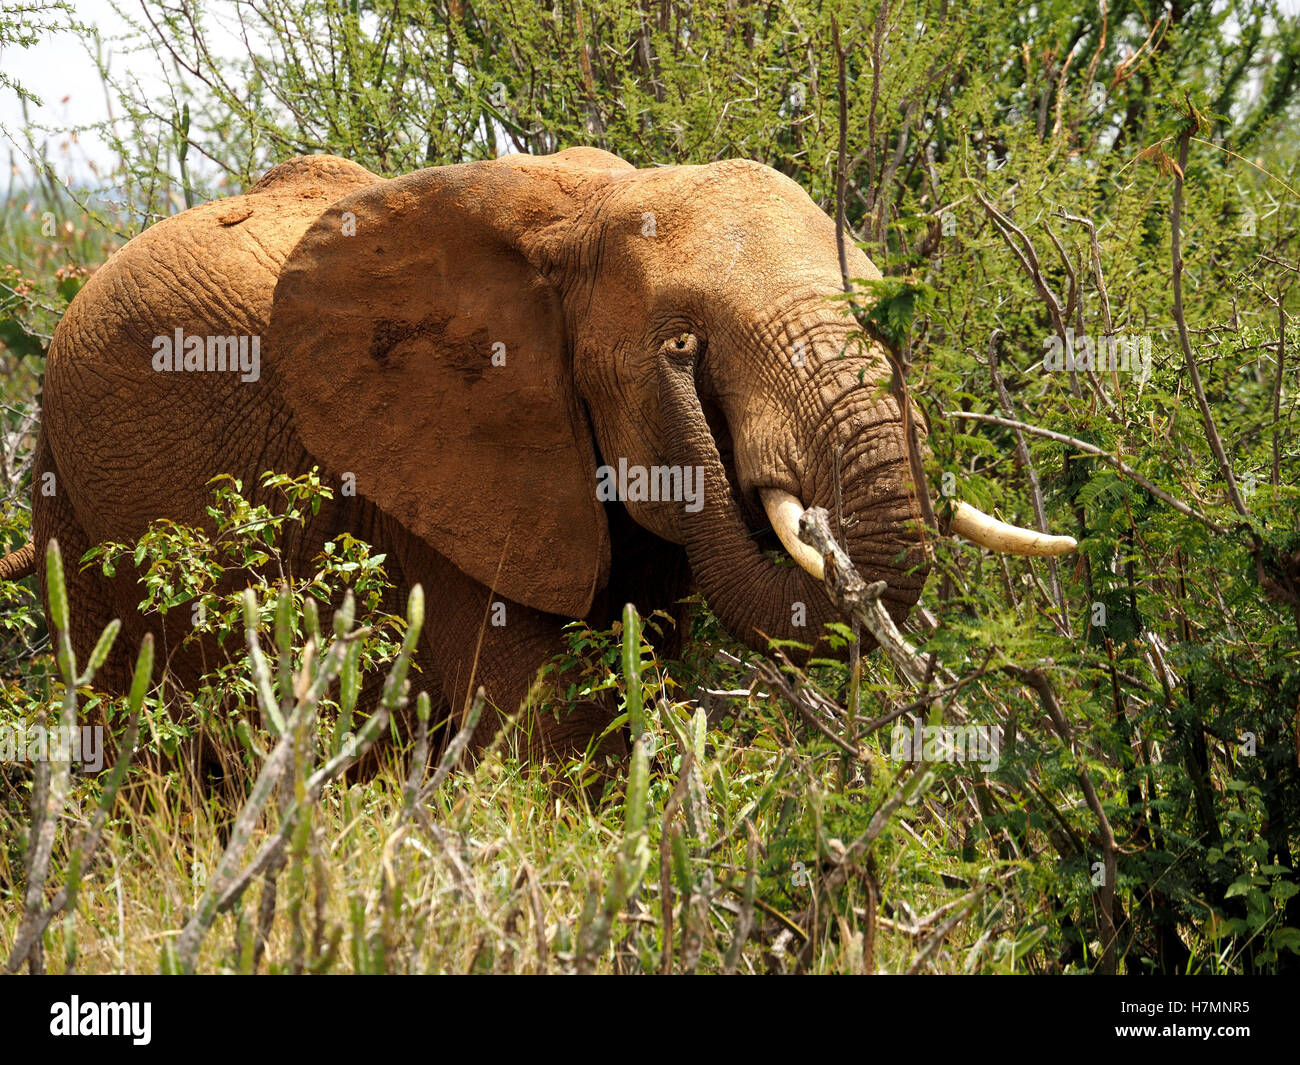 African elephant (Loxodonta africana) rubbing eye with trunk as if playing peepo or creating trompe l'oeil effect of false eye - Laikipia Kenya Africa Stock Photo